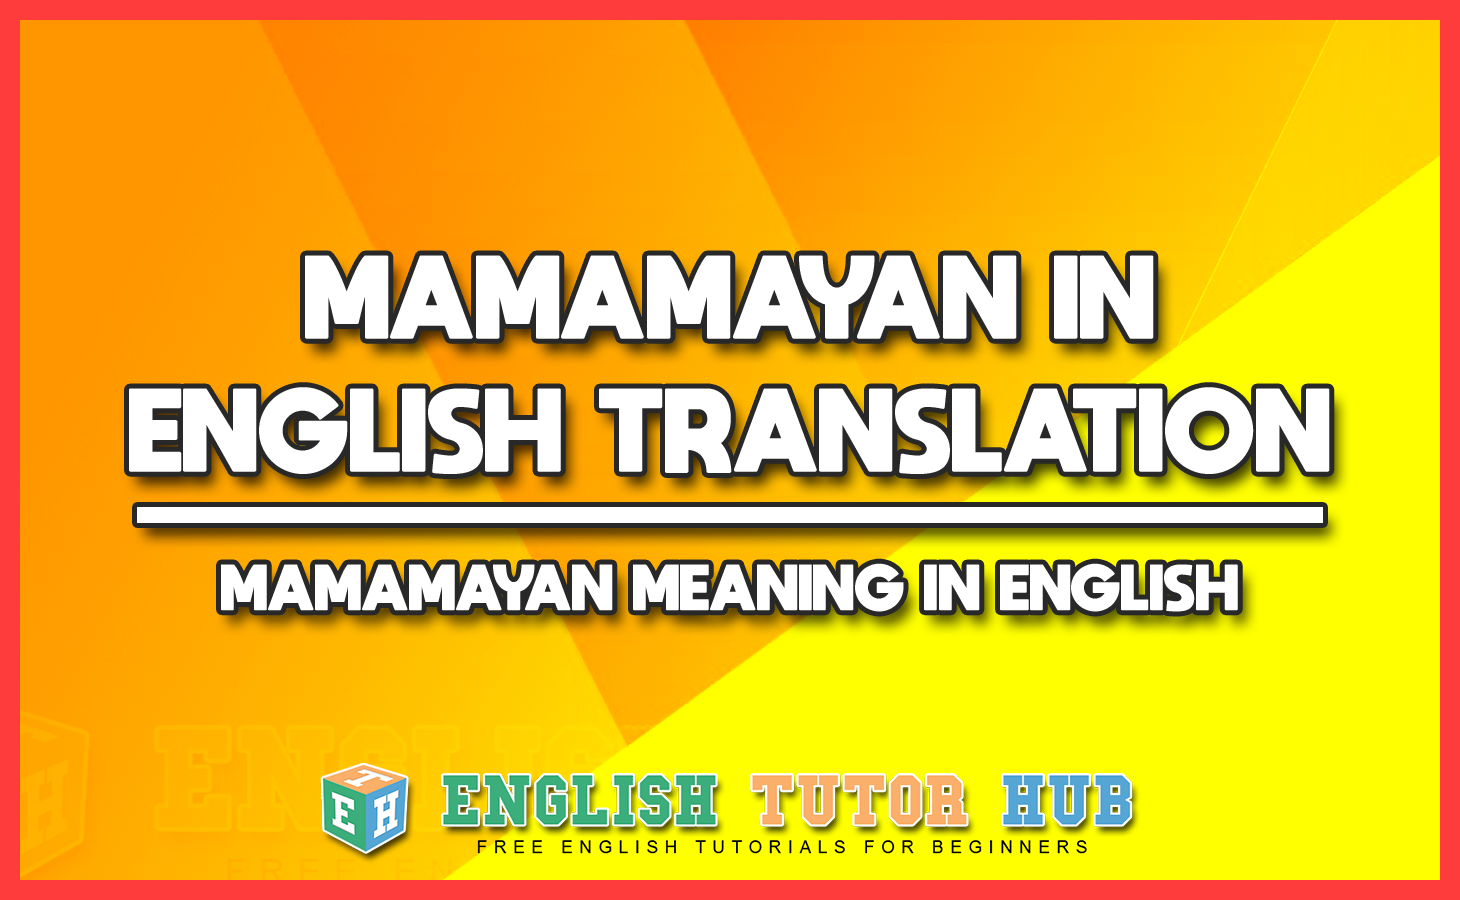 MAMAMAYAN IN ENGLISH TRANSLATION - MAMAMAYAN MEANING IN ENGLISH